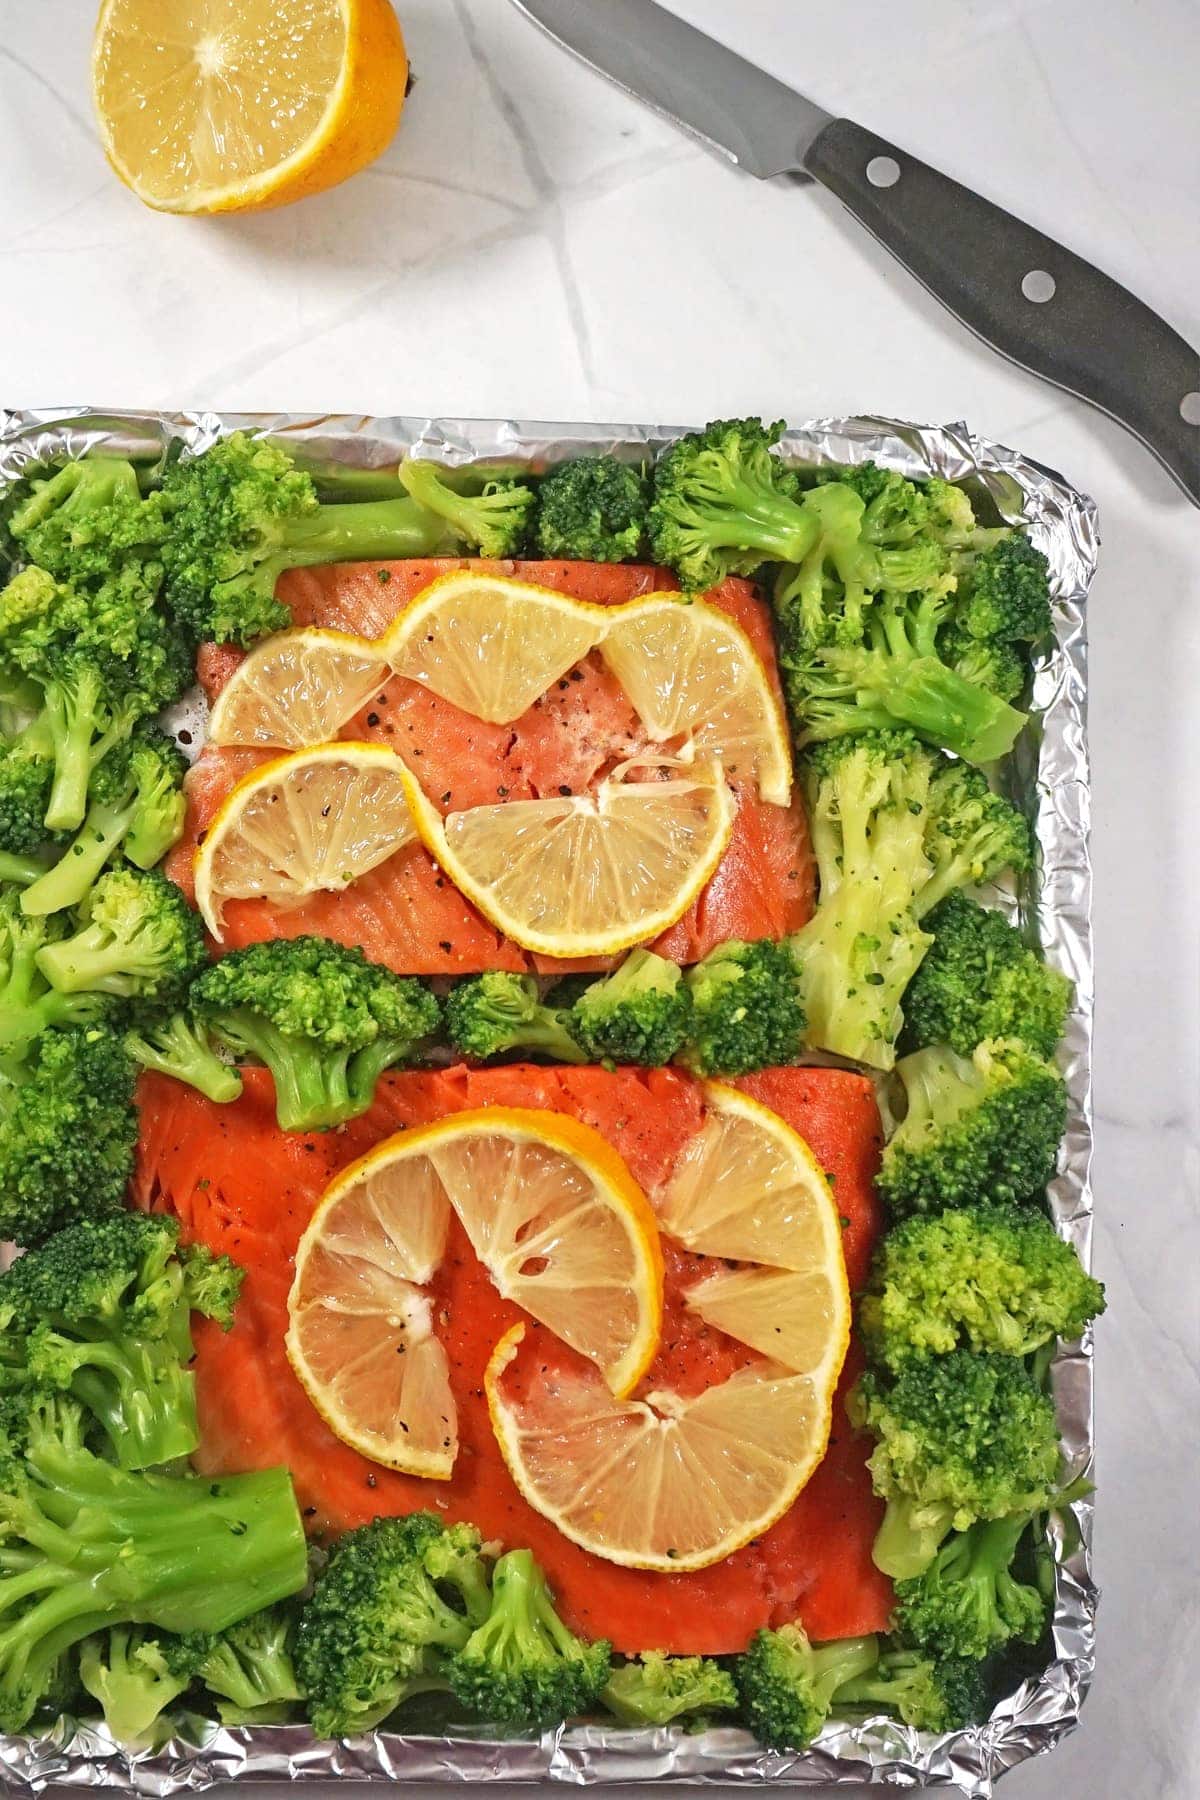 Salmon and broccoli with lemon on a toaster oven pan